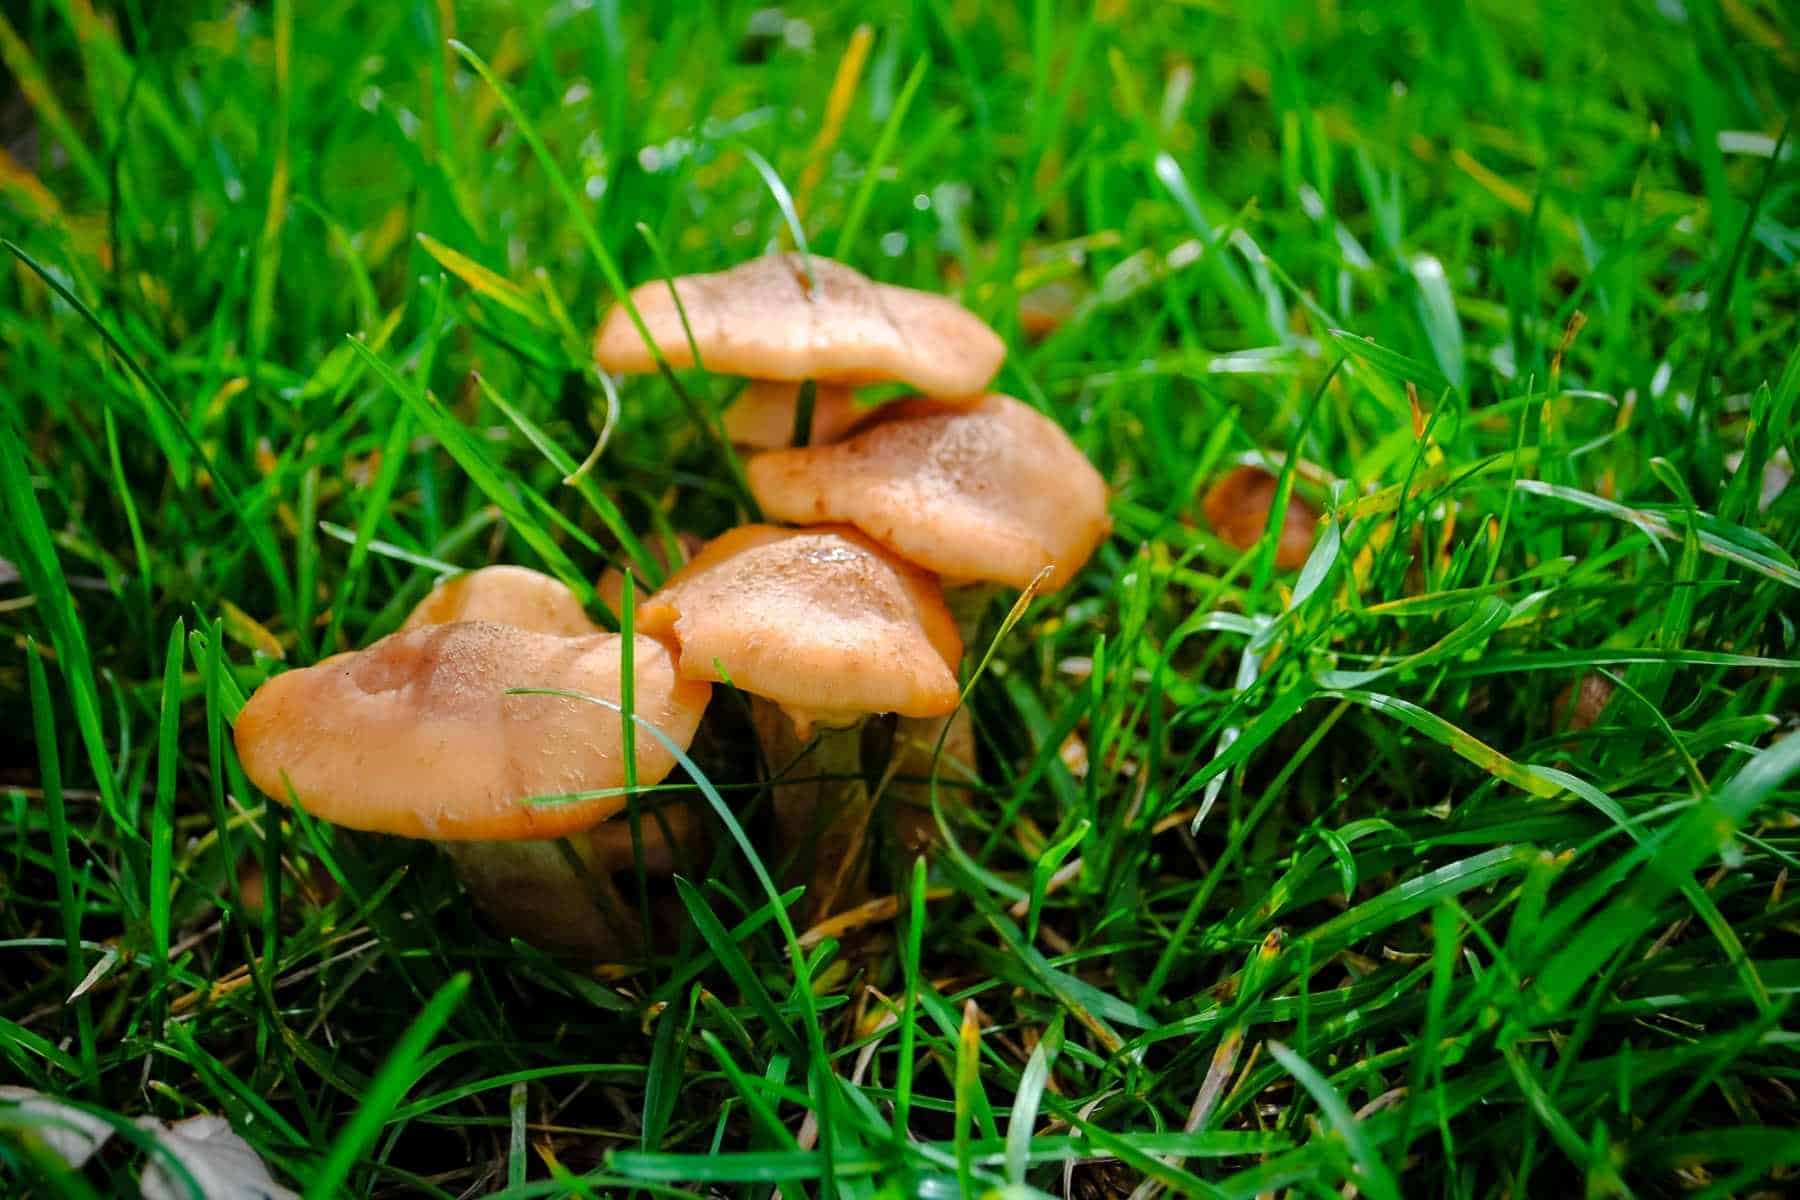 Kids Friendly Fungi